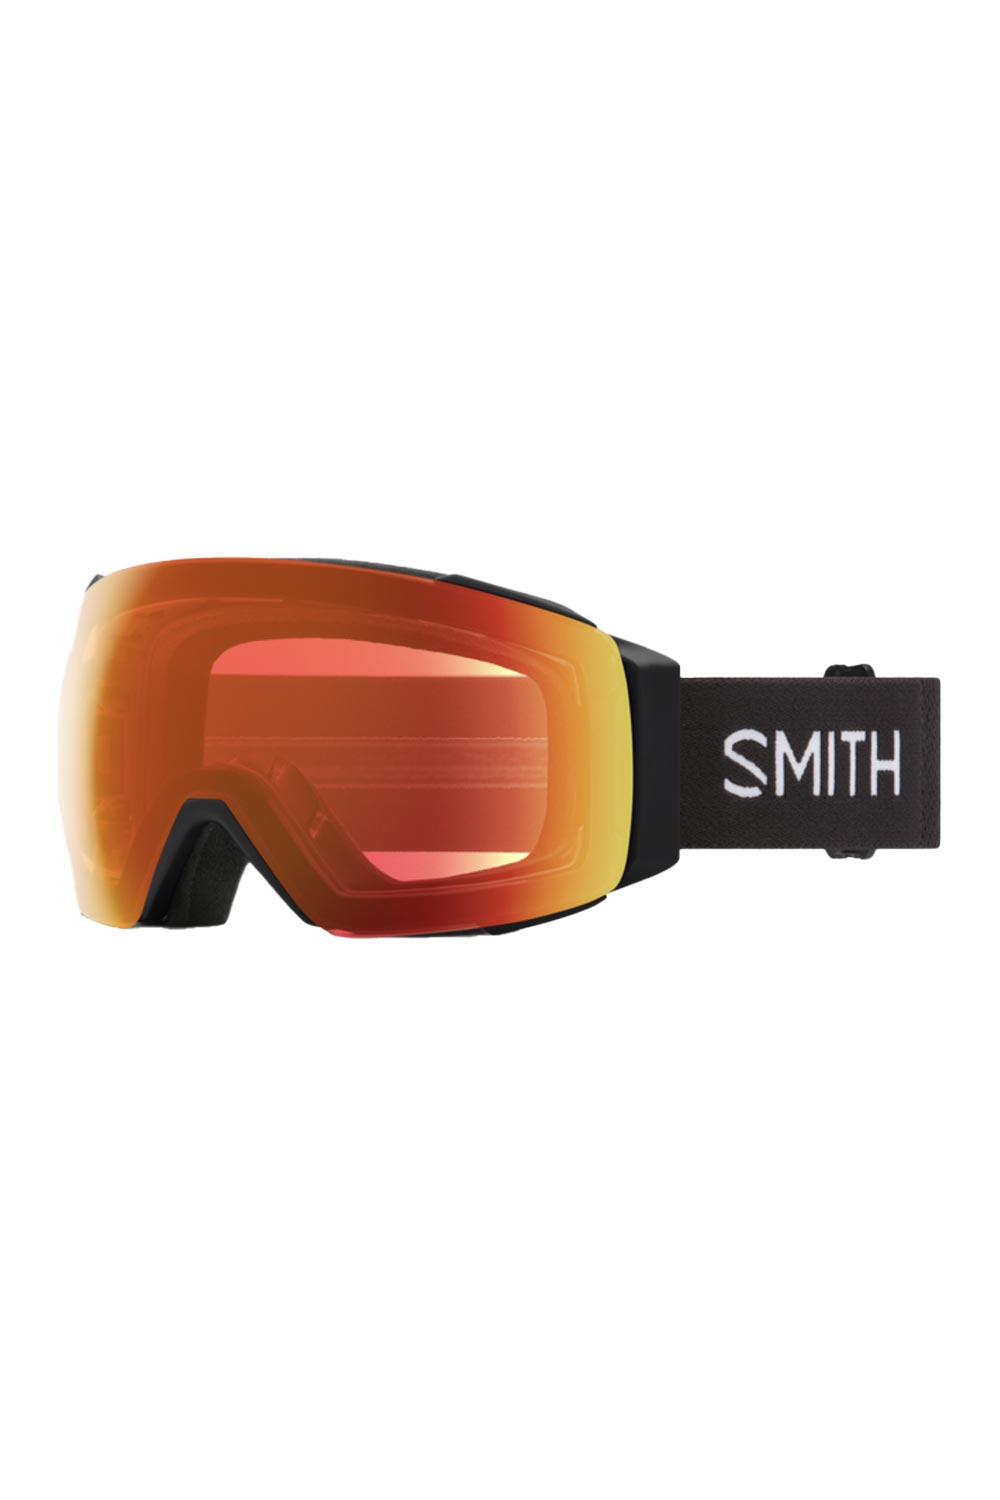 Smith ski goggles, black strap and red lens